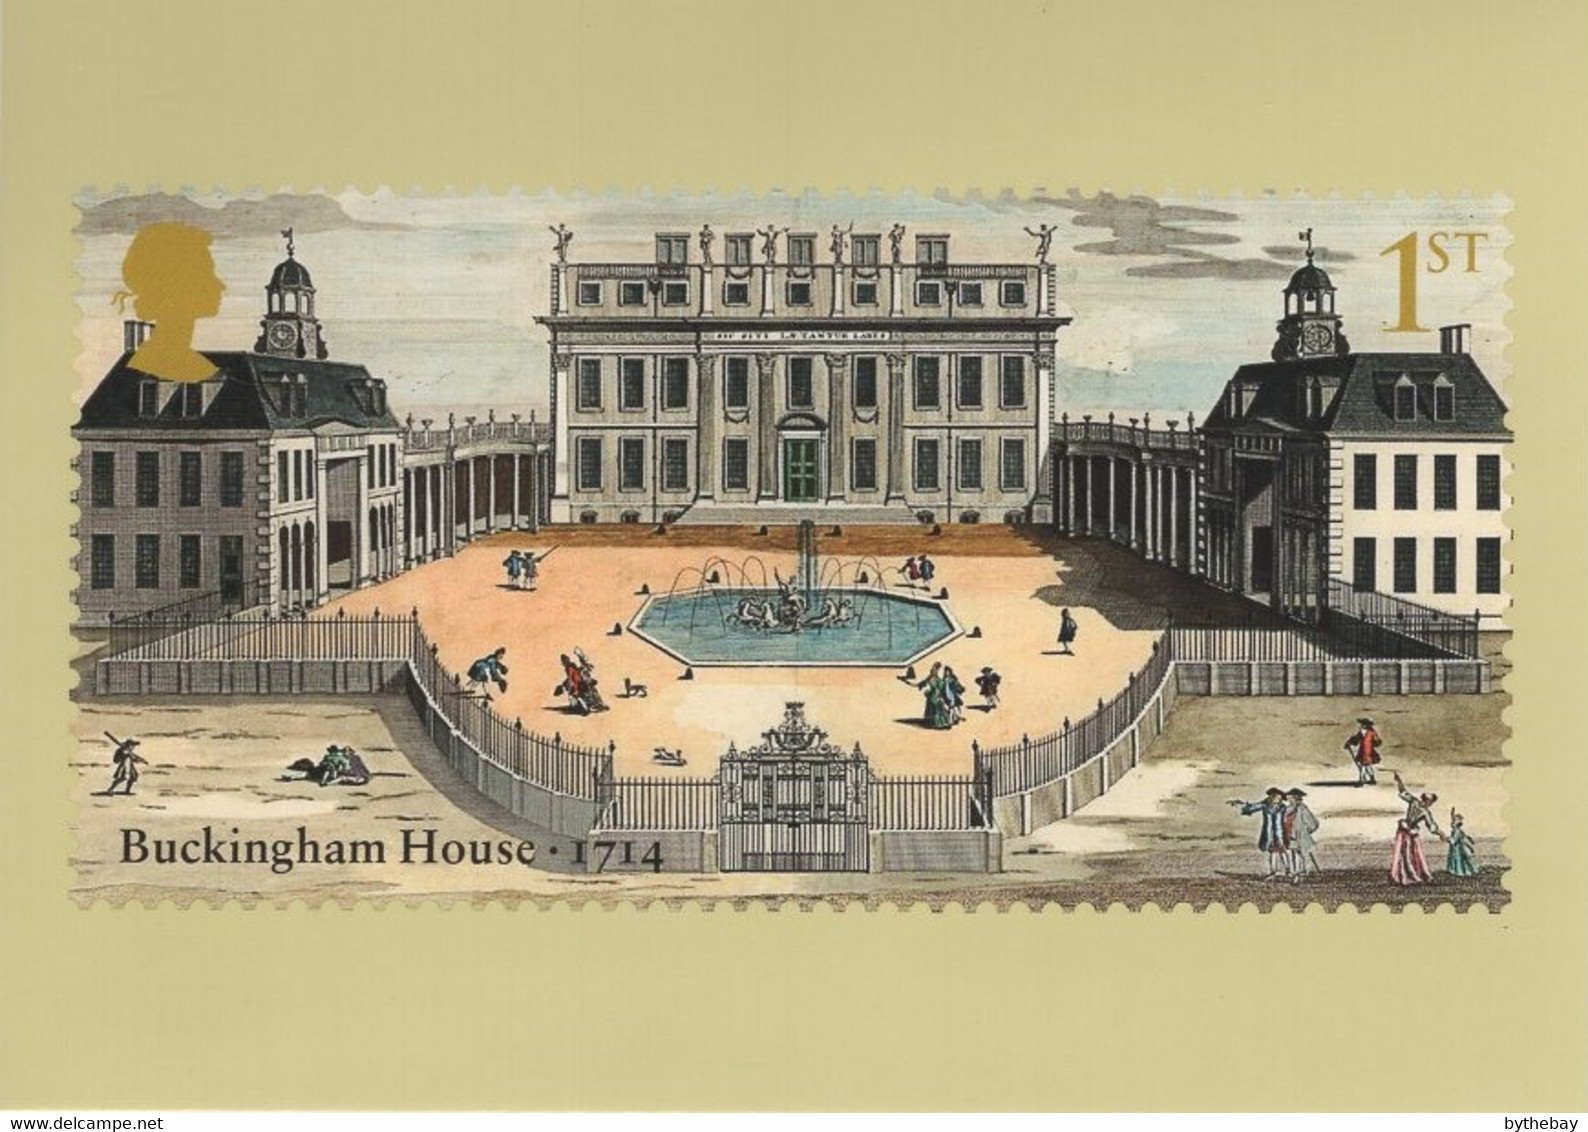 Great Britain 2014 PHQ Card Sc 3283 1st Buckingham House 1714 - PHQ Cards